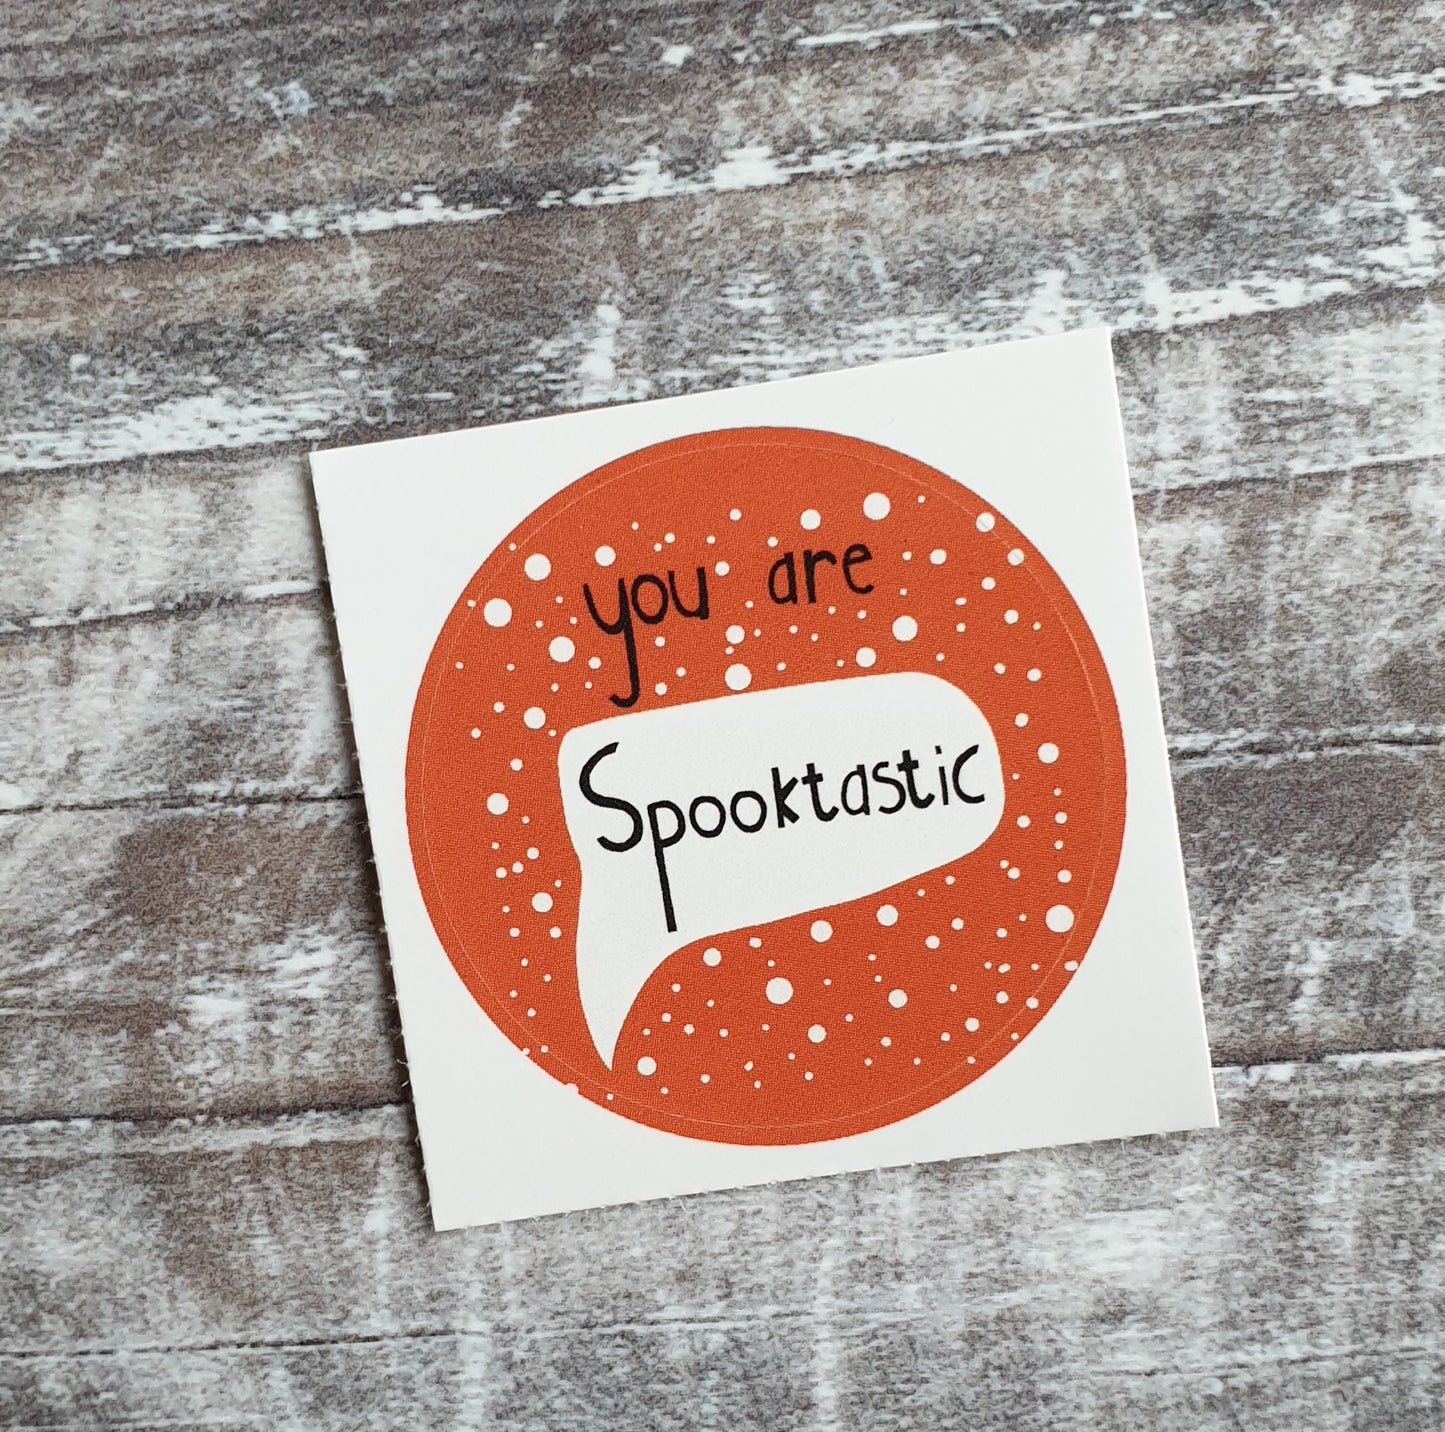 Spooktastic 38mm Vinyl Sticker